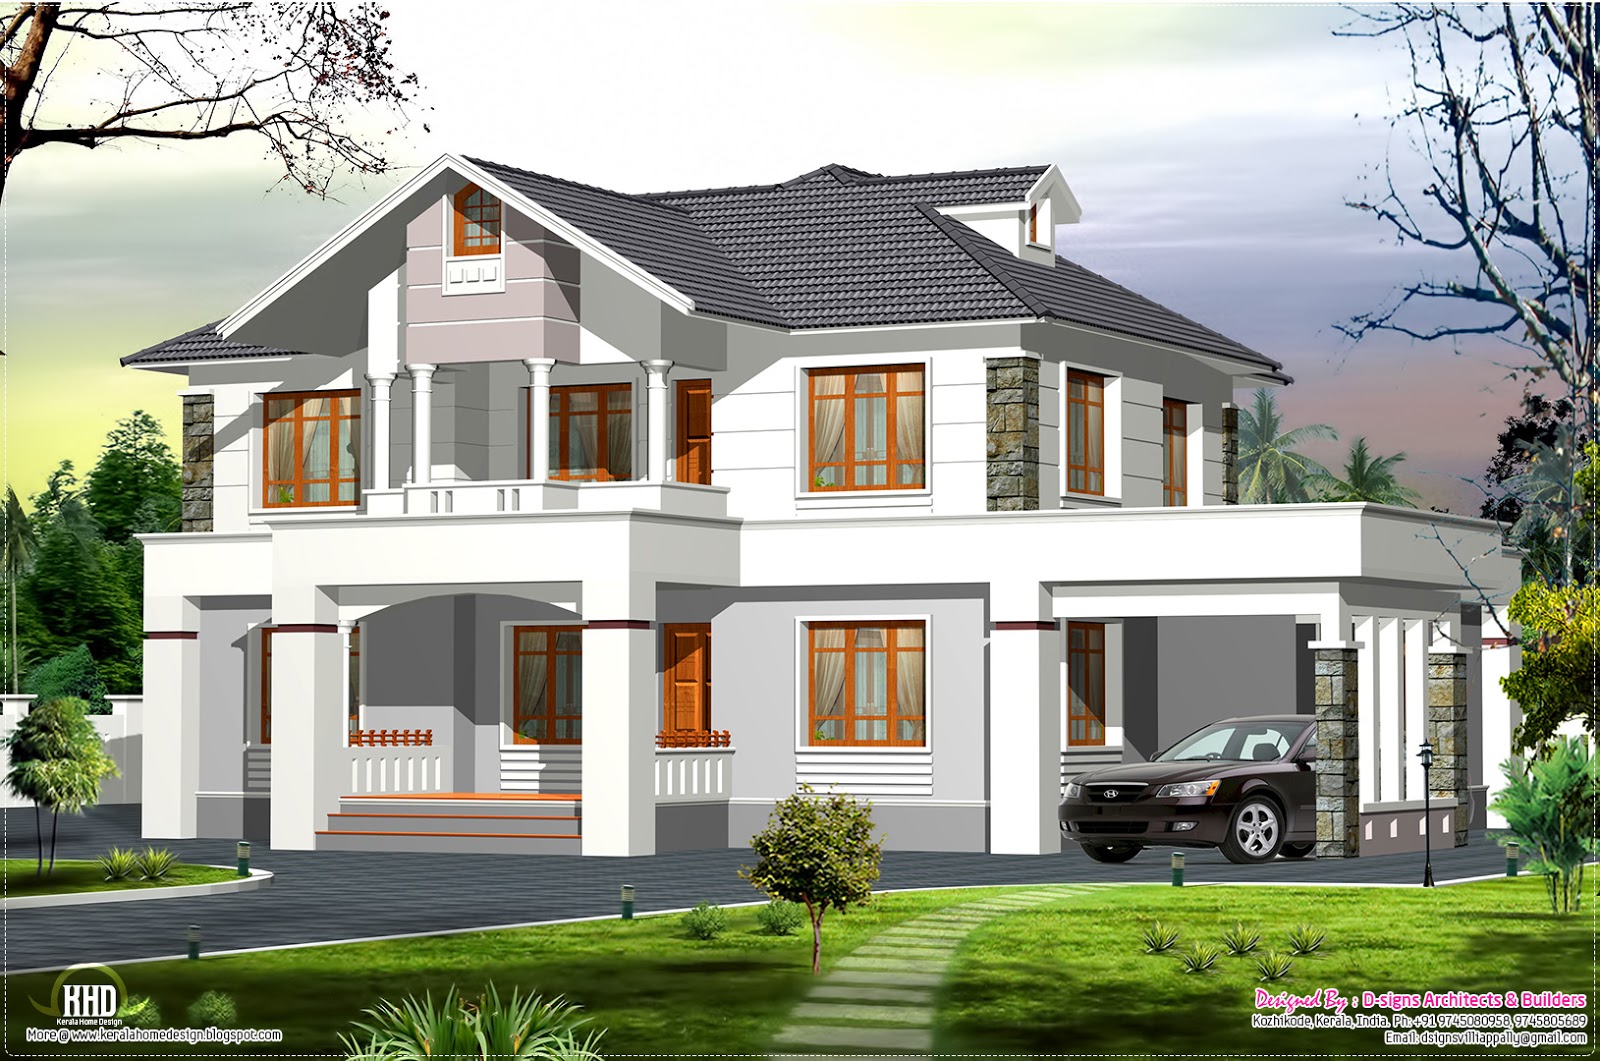 2400 sq.feet Western style home in Kerala - Kerala home design and ...